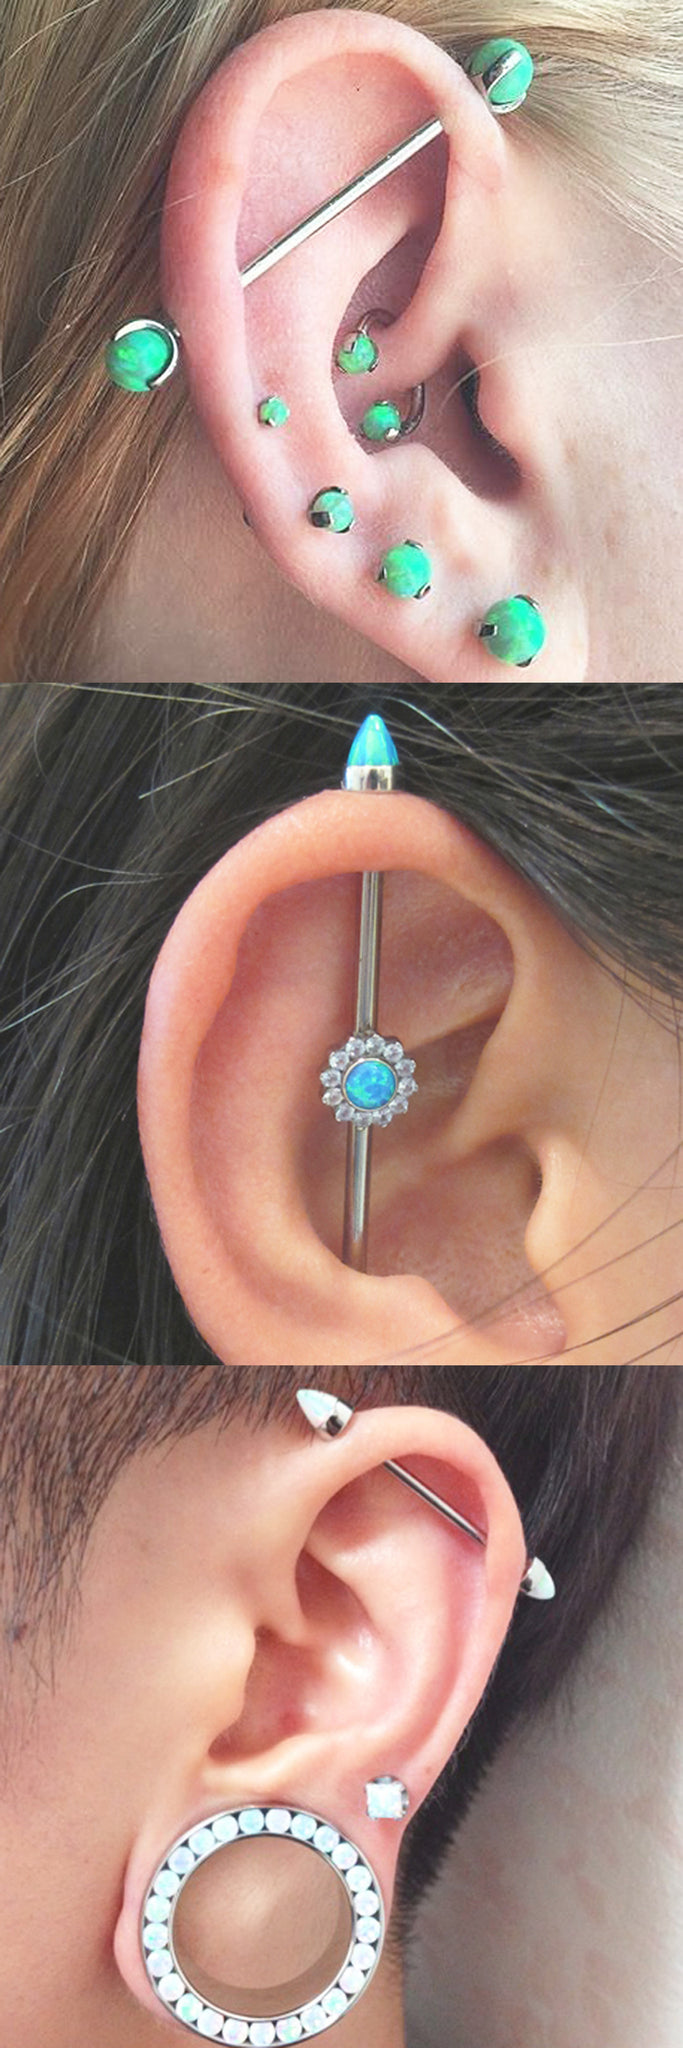 Cool Ear Piercing Ideas at MyBodiArt.com - Opal Industrial Barbell - Rook Horseshoe Ring - Daith Hoop 